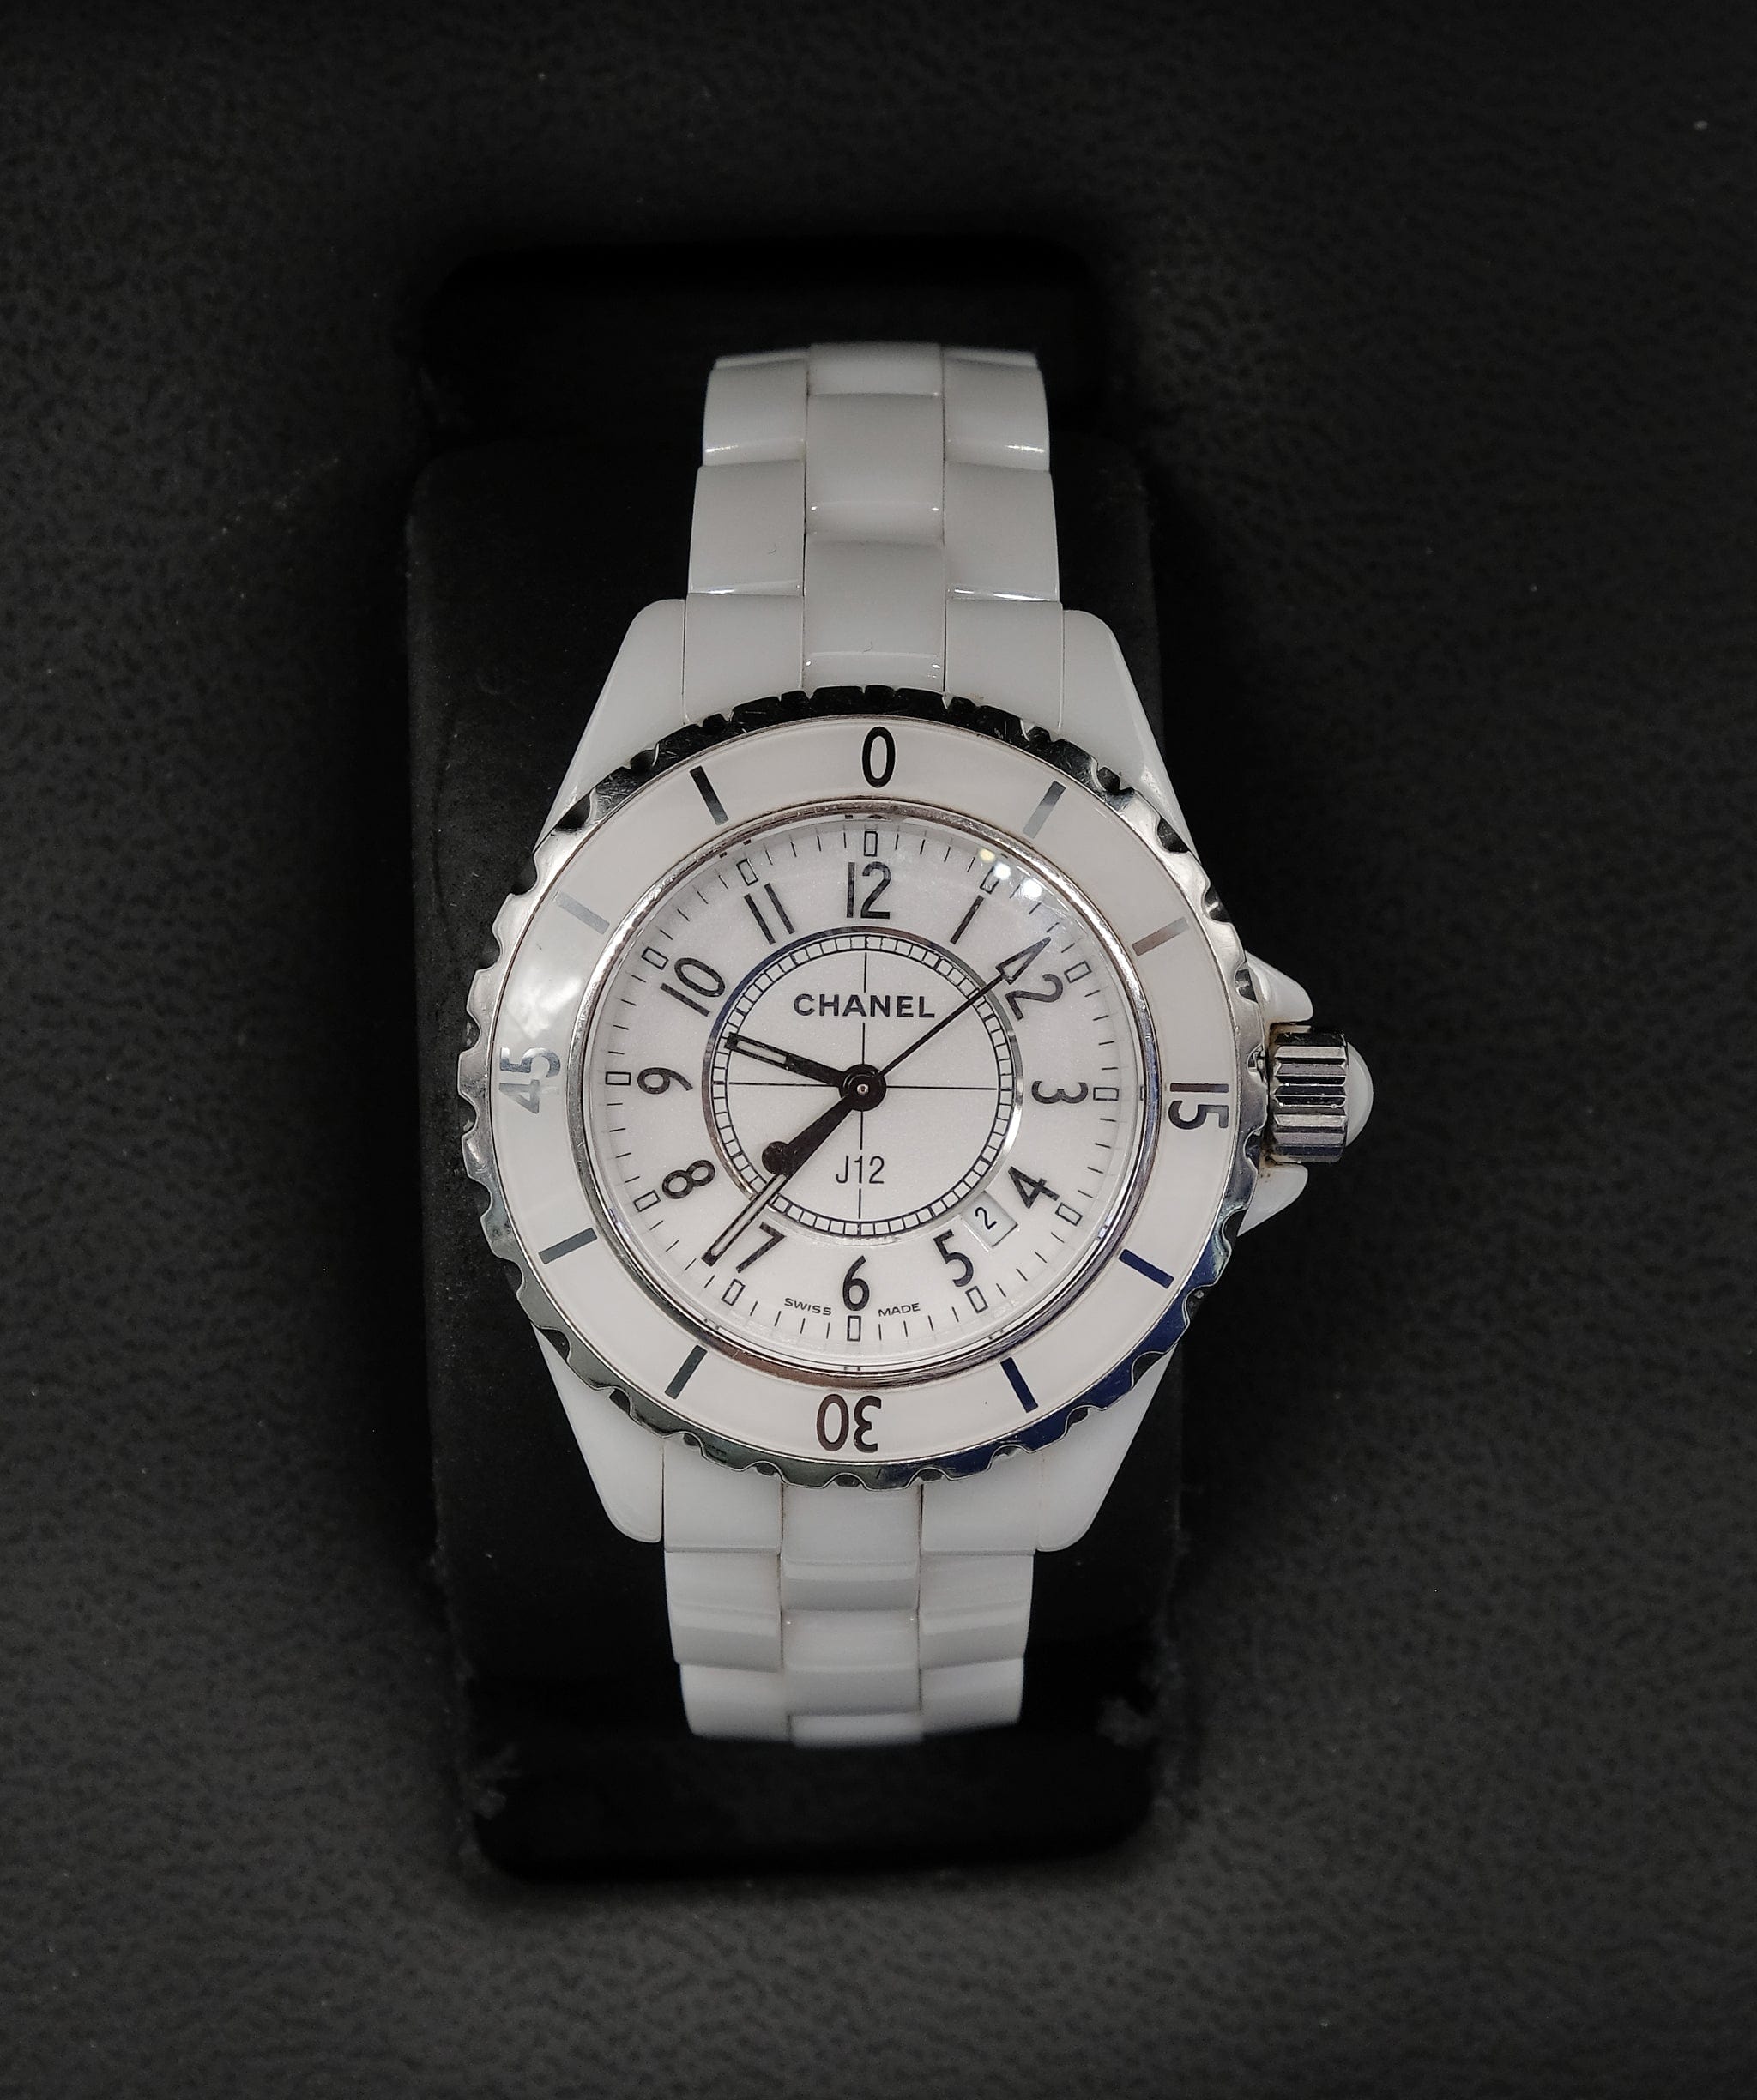 Chanel Chanel J12 Watch White Ceramic RJC2901